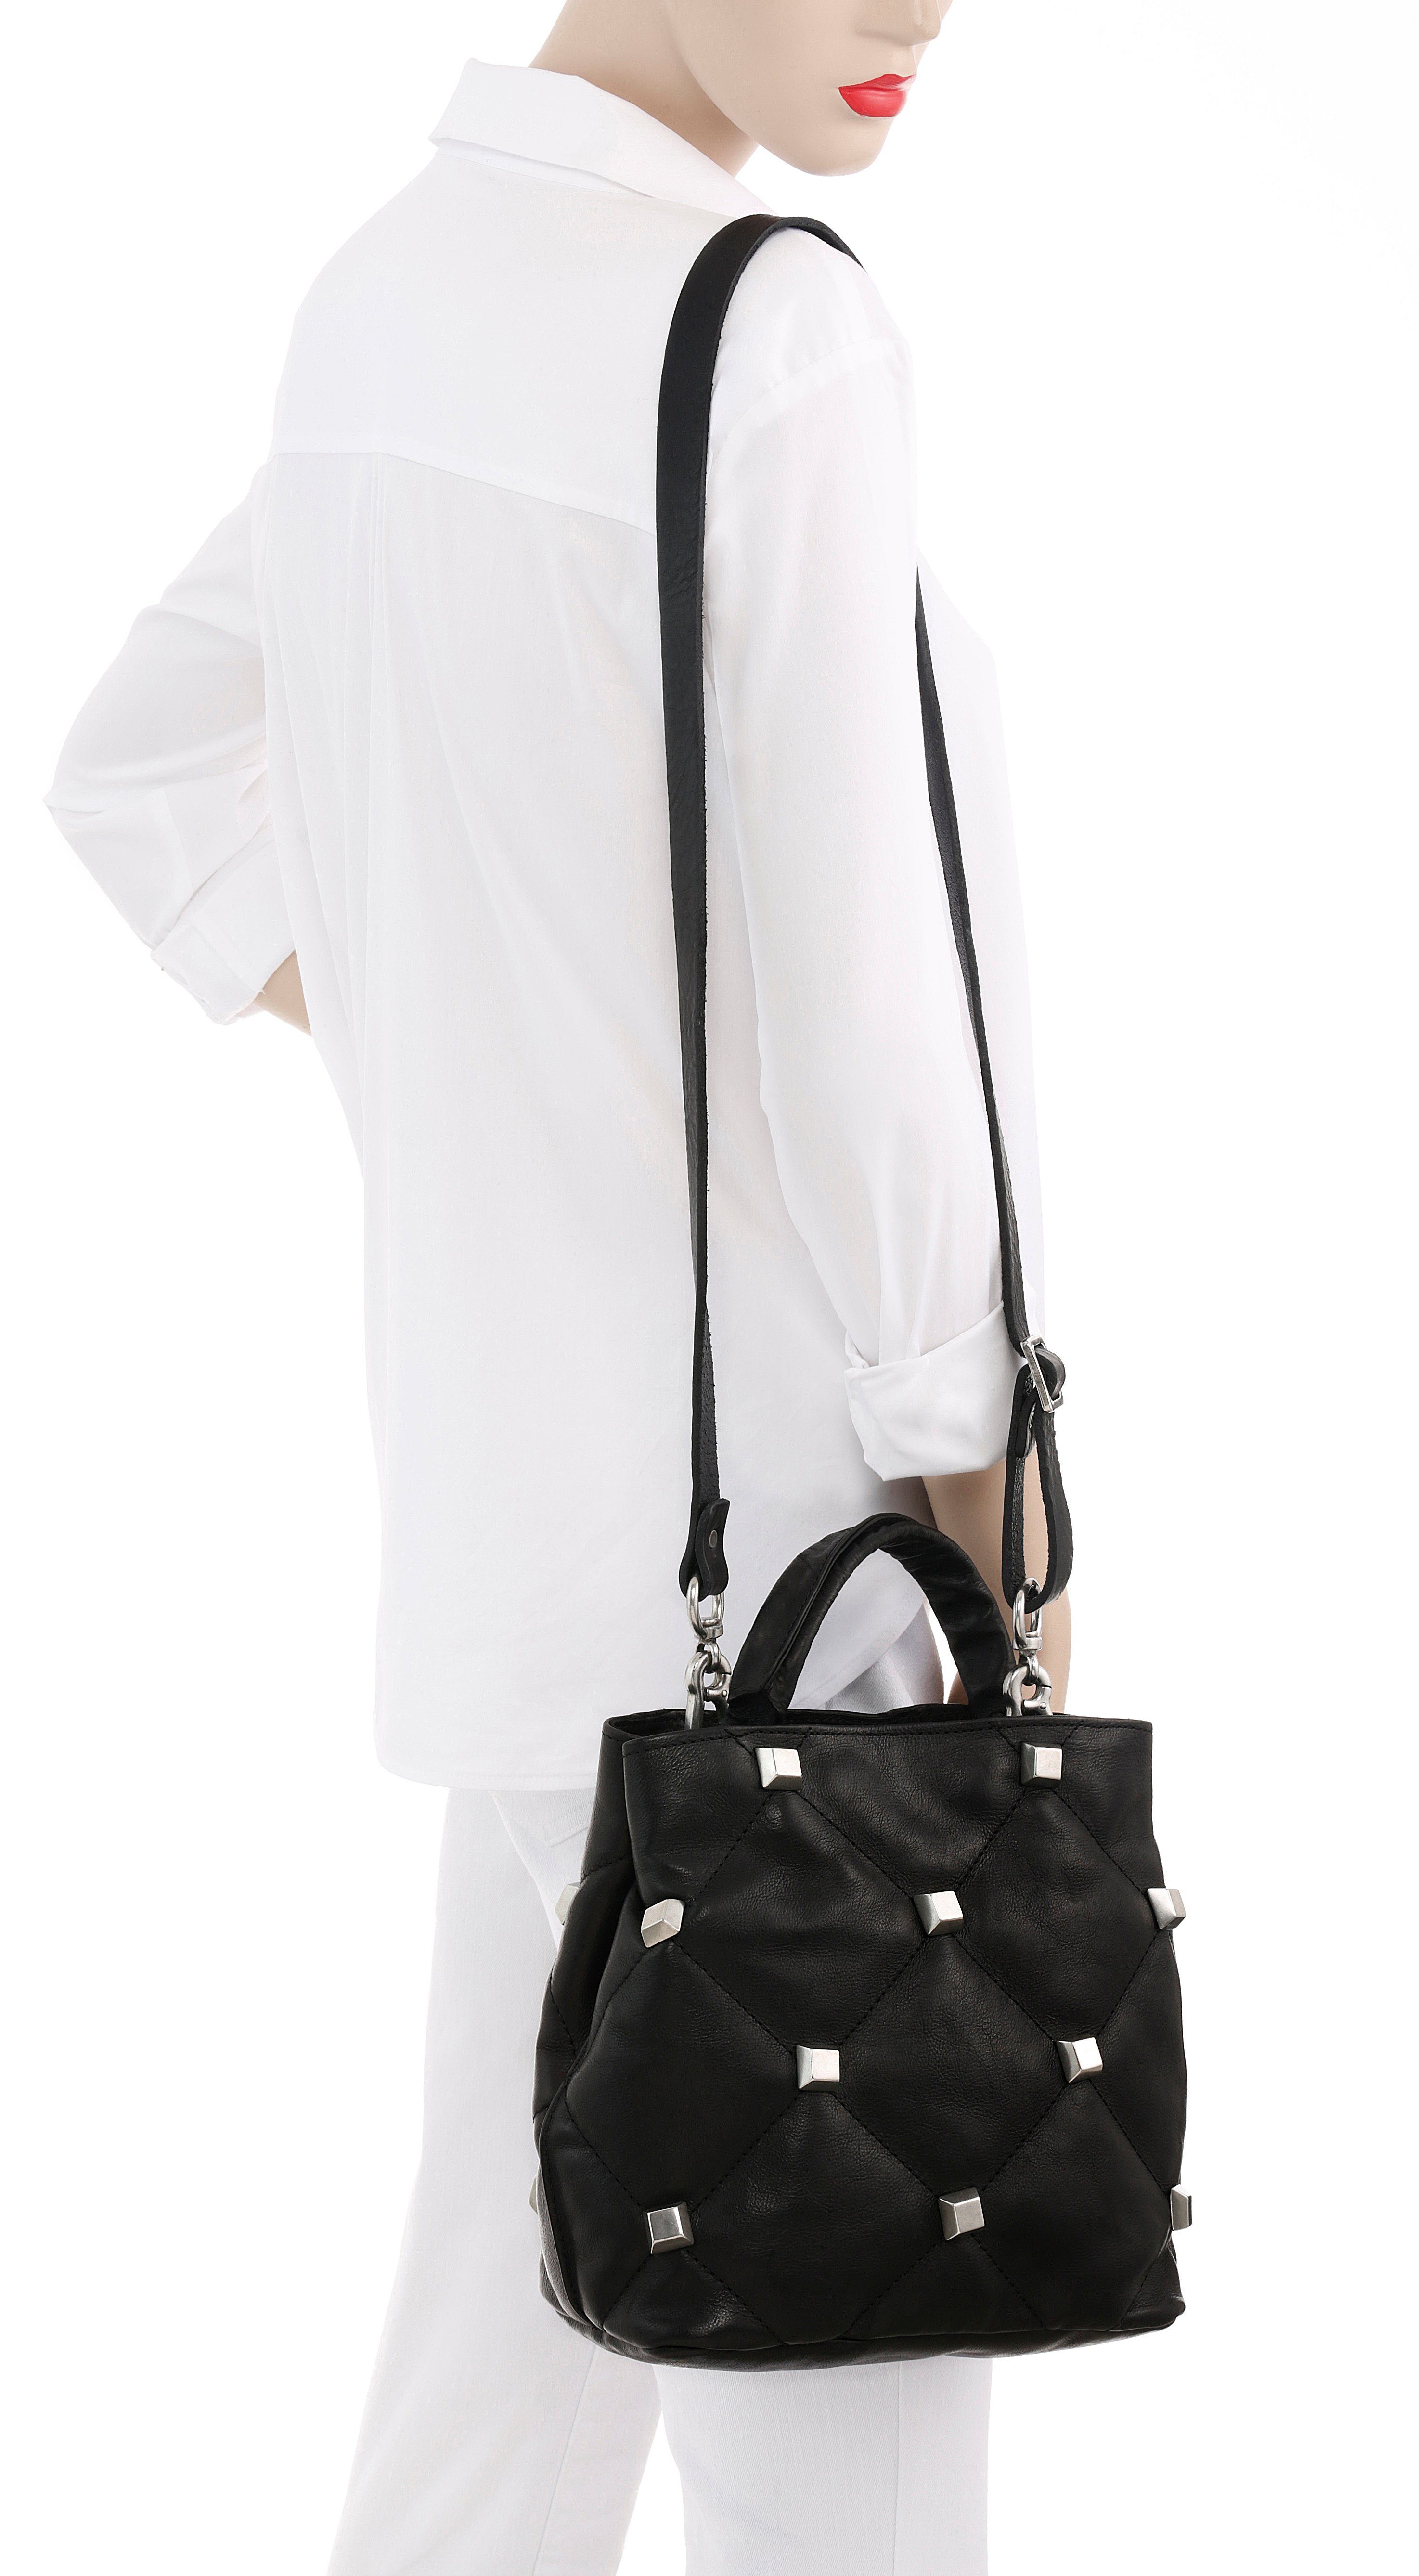 Damen Handtaschen A.S.98 Henkeltasche, aus echtem Leder mit Nieten verziert